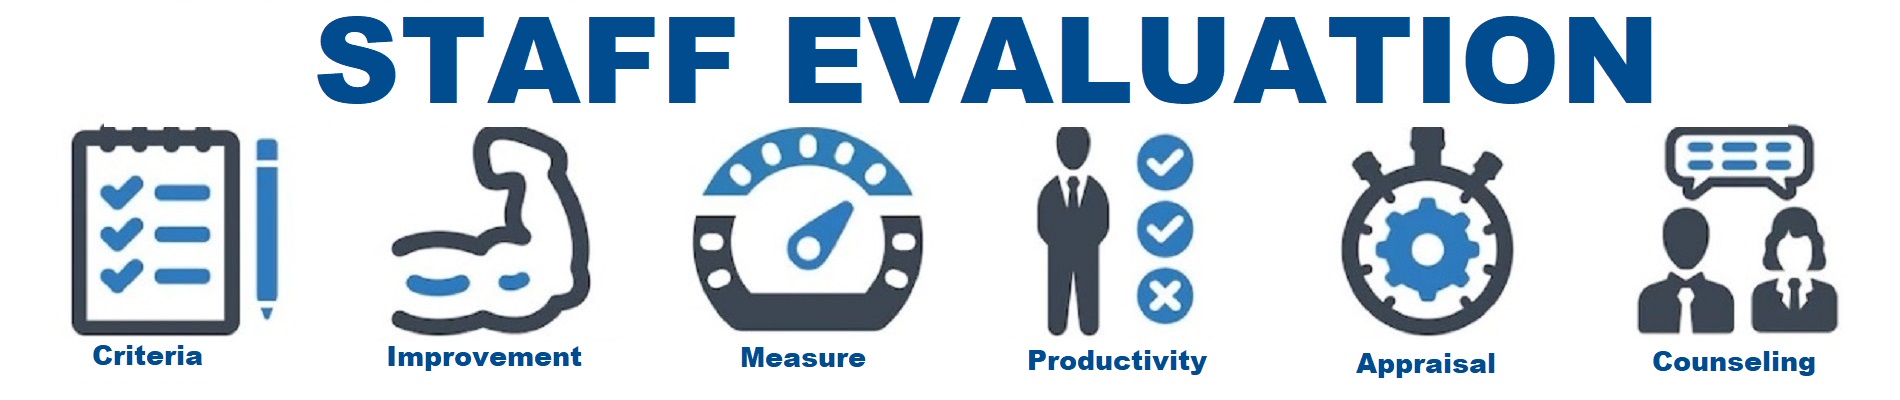 Teaching quality evaluation criteria